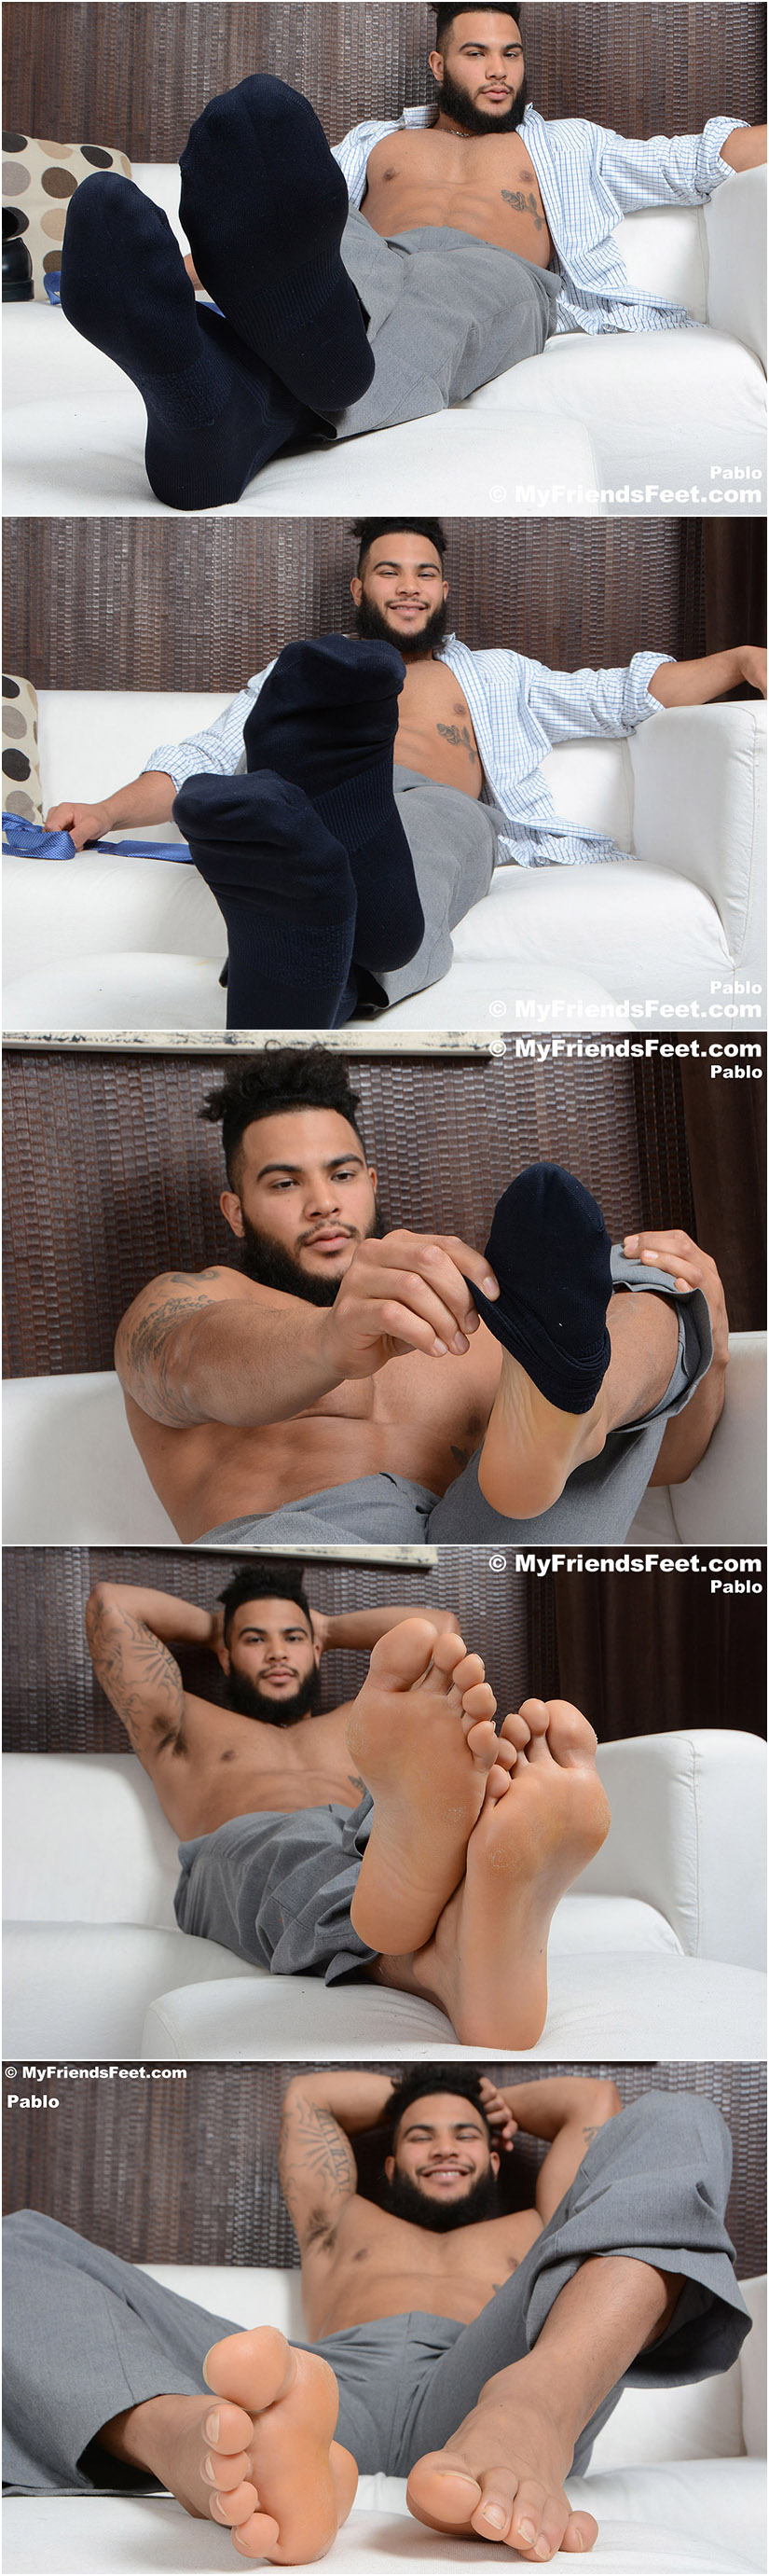 Pablo’s Big, Masculine Feet | Daily Dudes @ Dude Dump